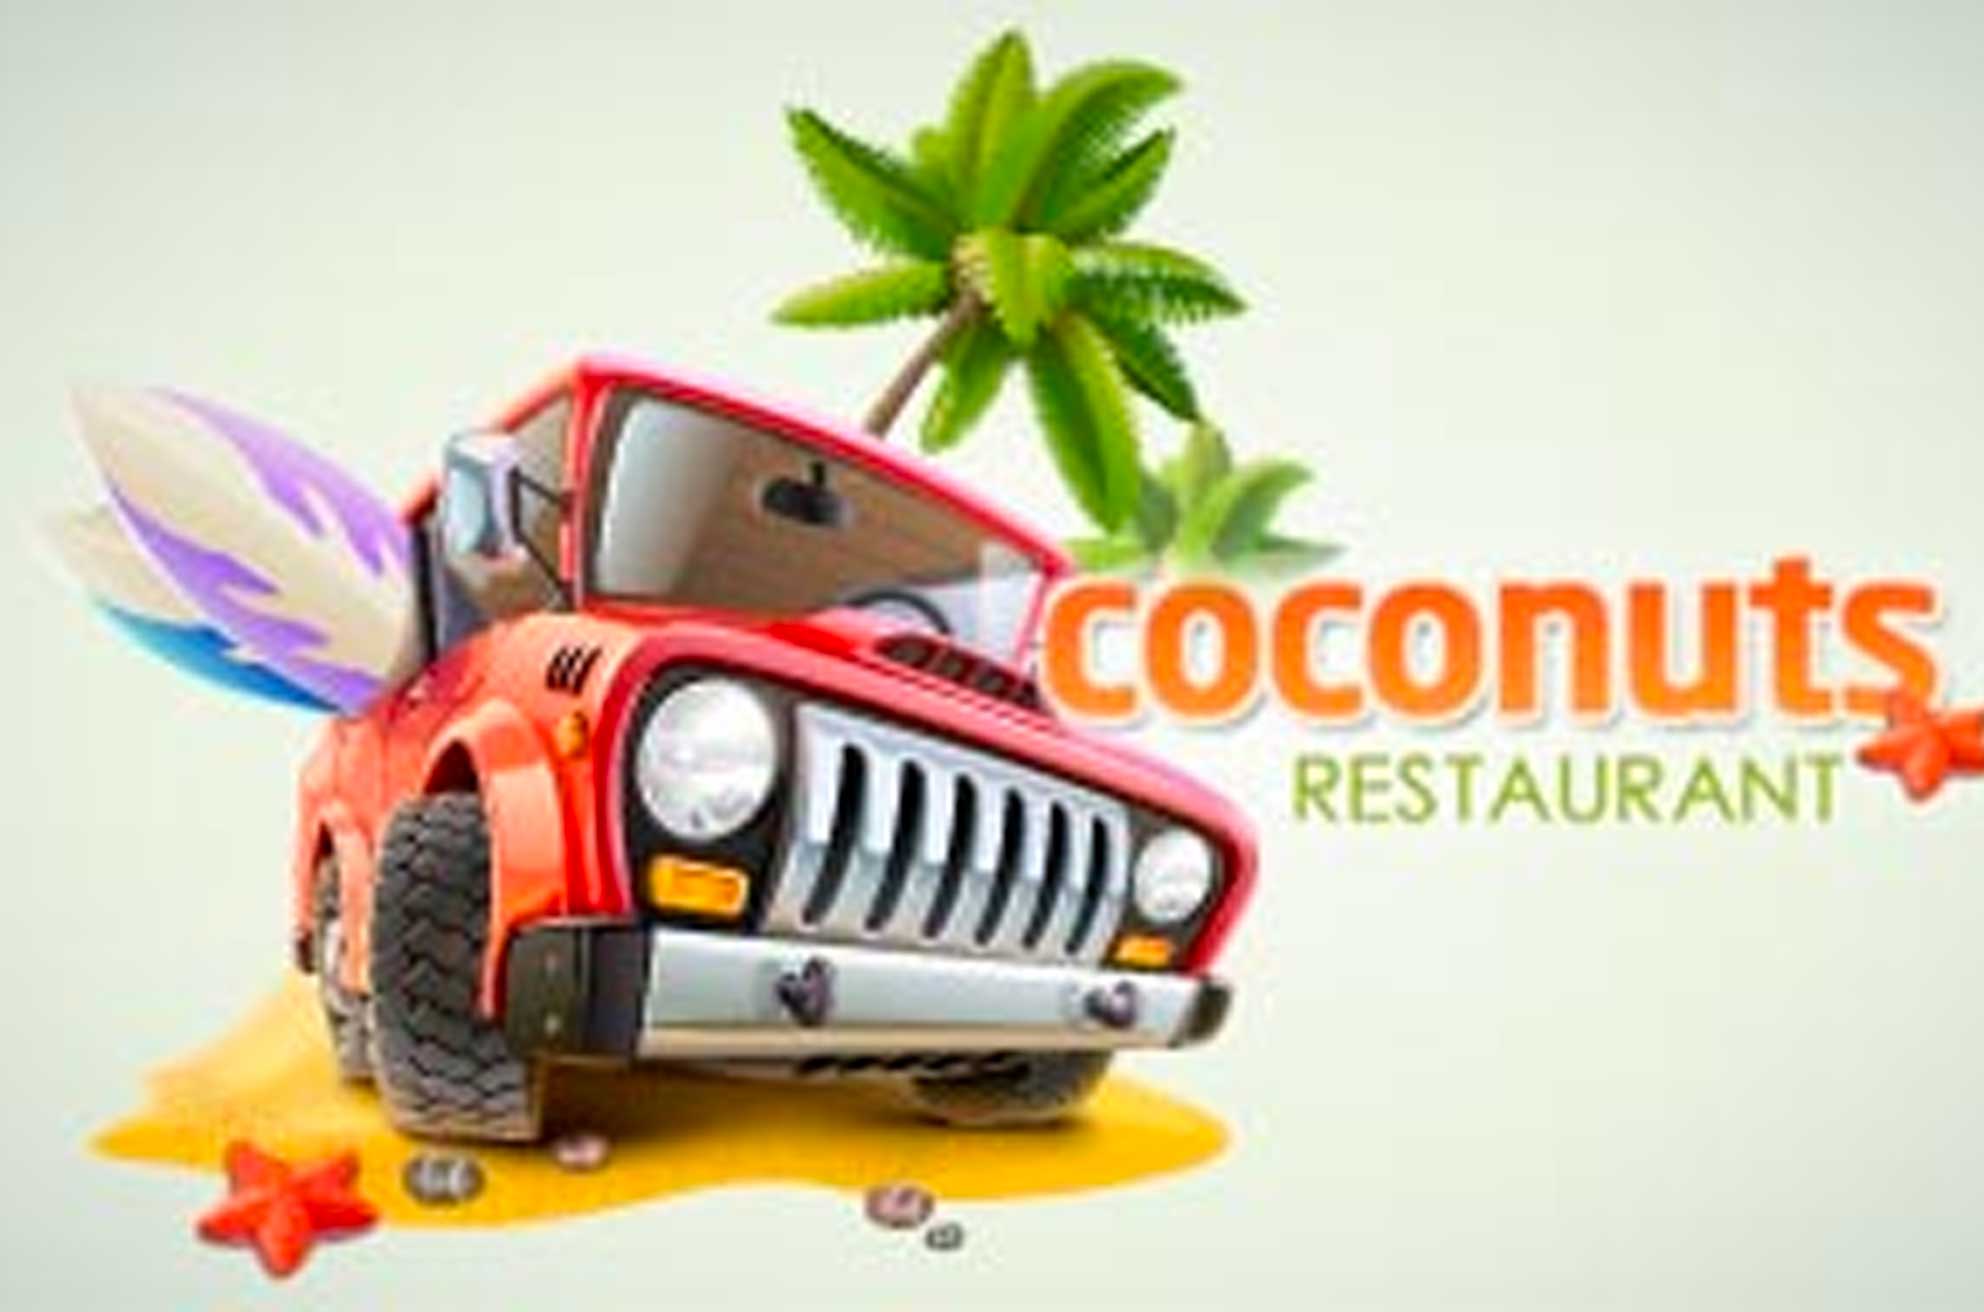 coconuts restaurant panama city beach